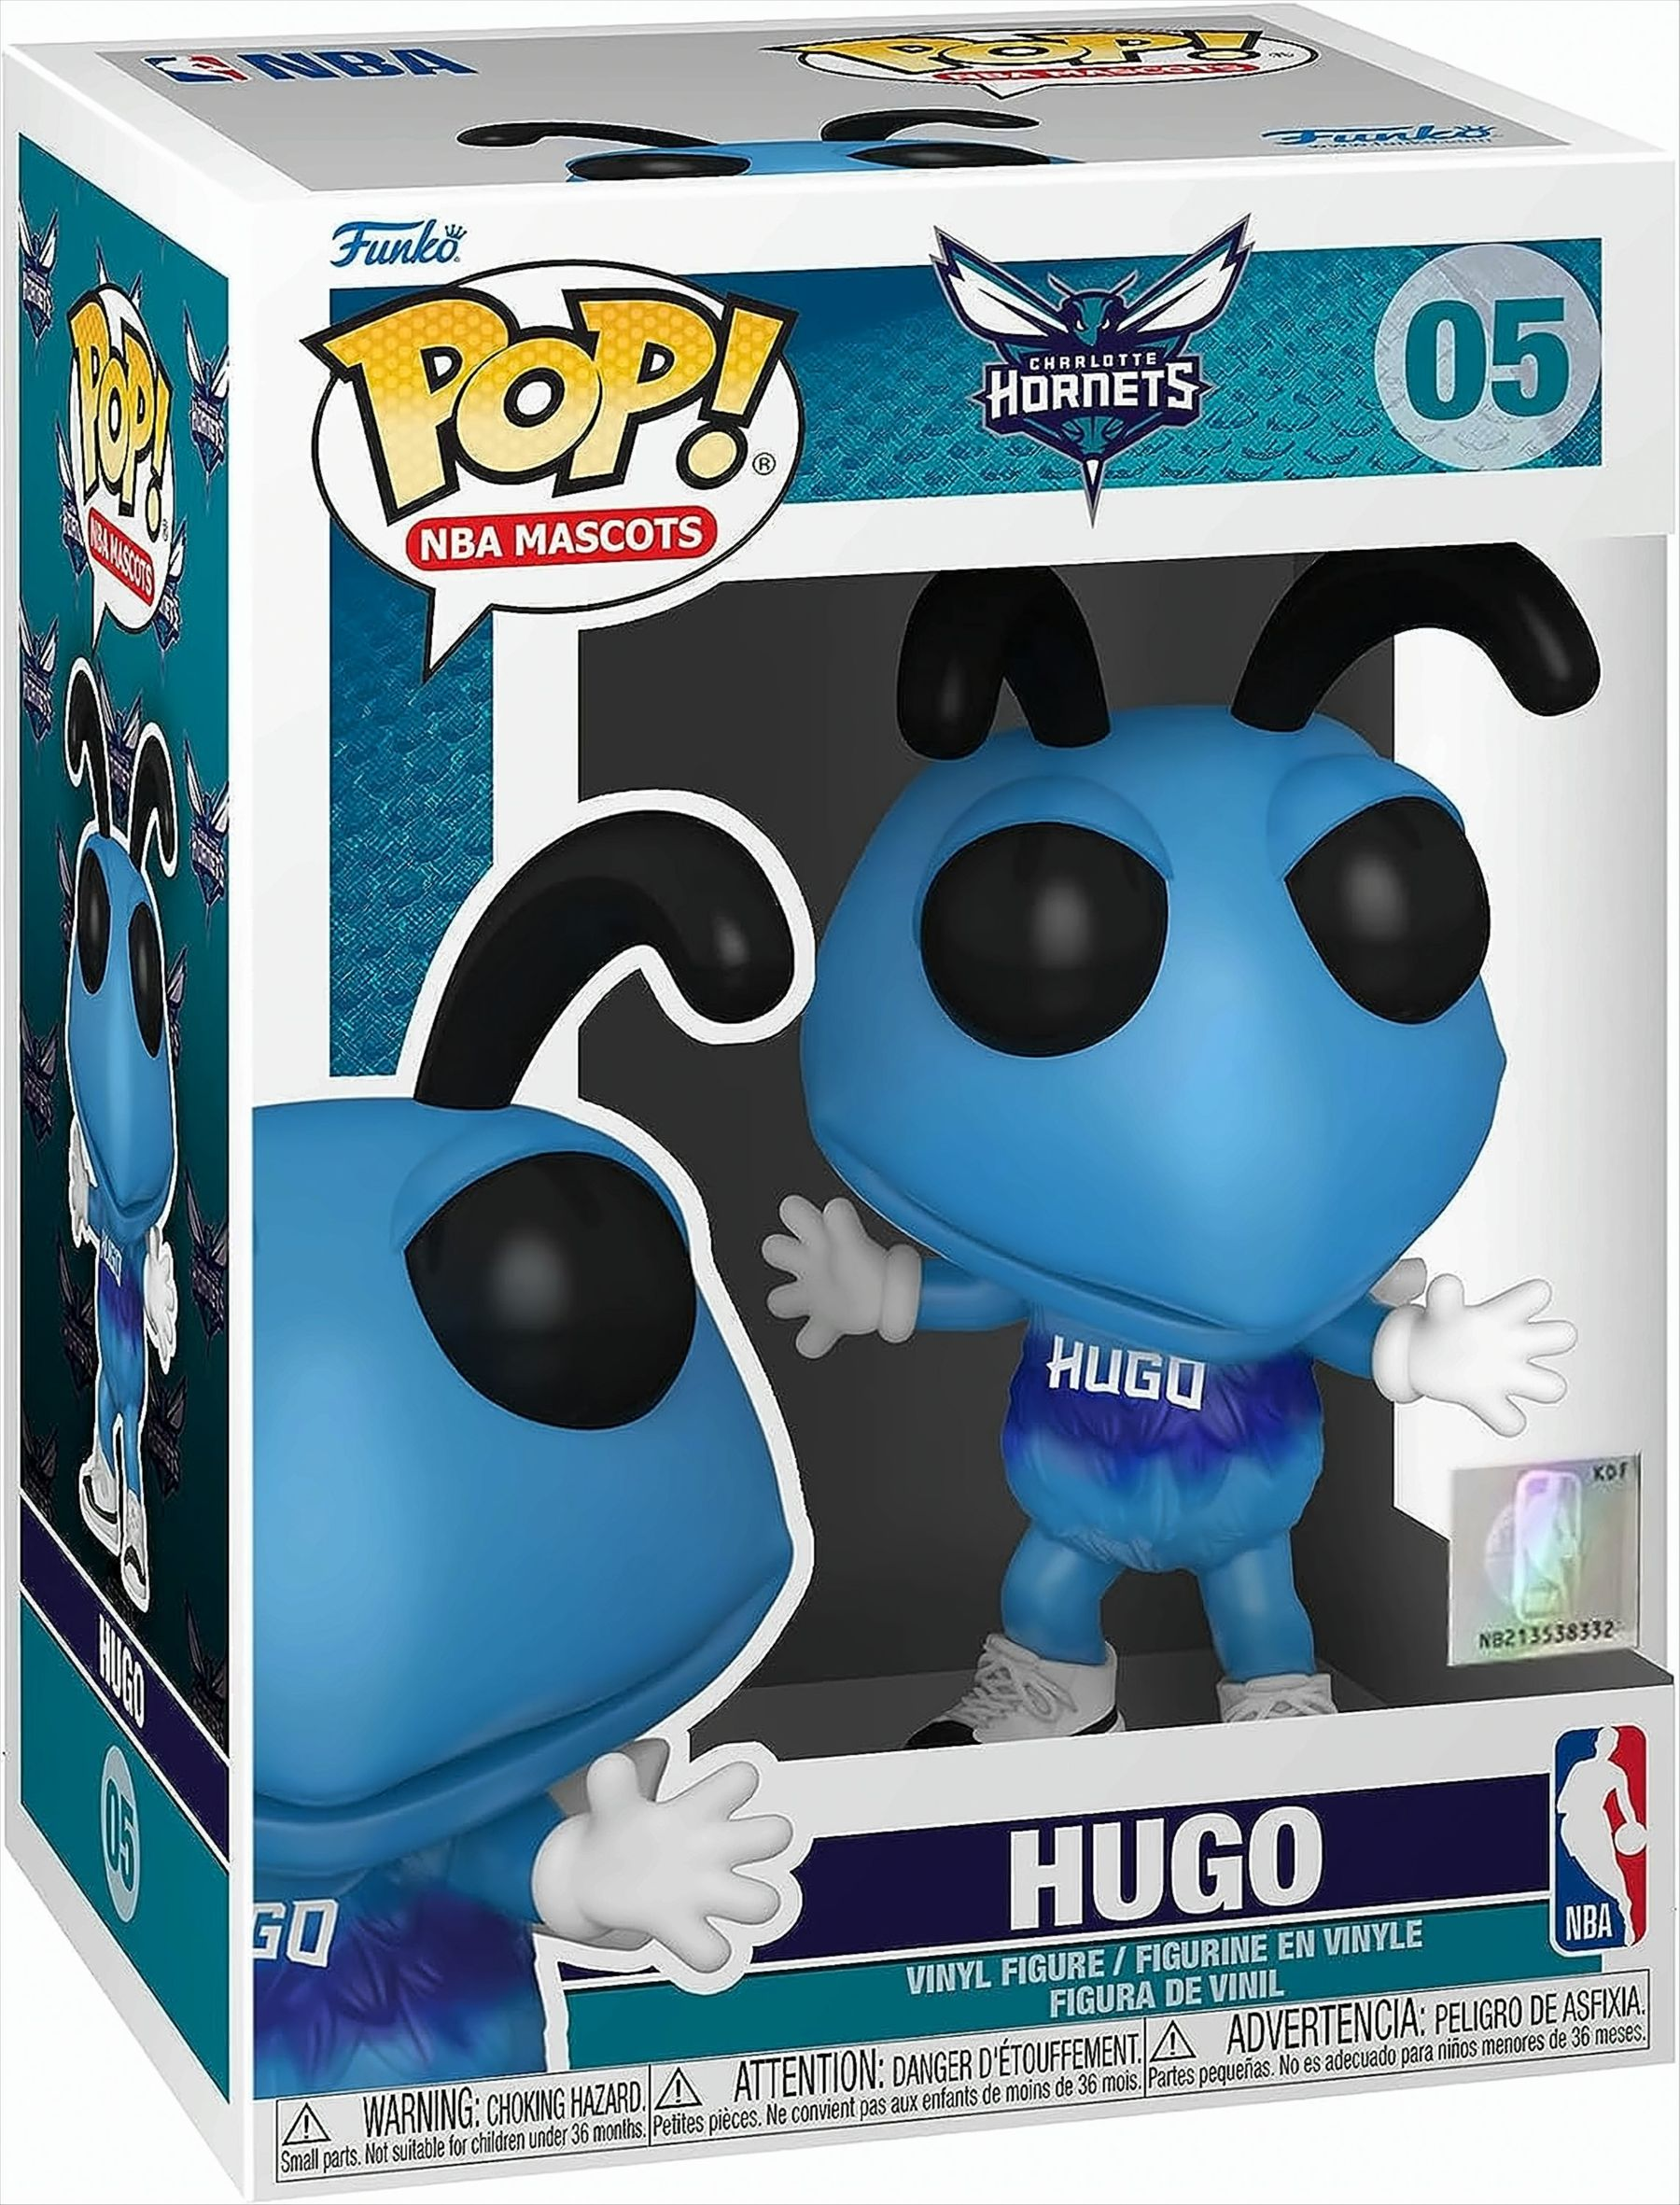 Hugo/Charlotte POP NBA Mascots Hornets - -